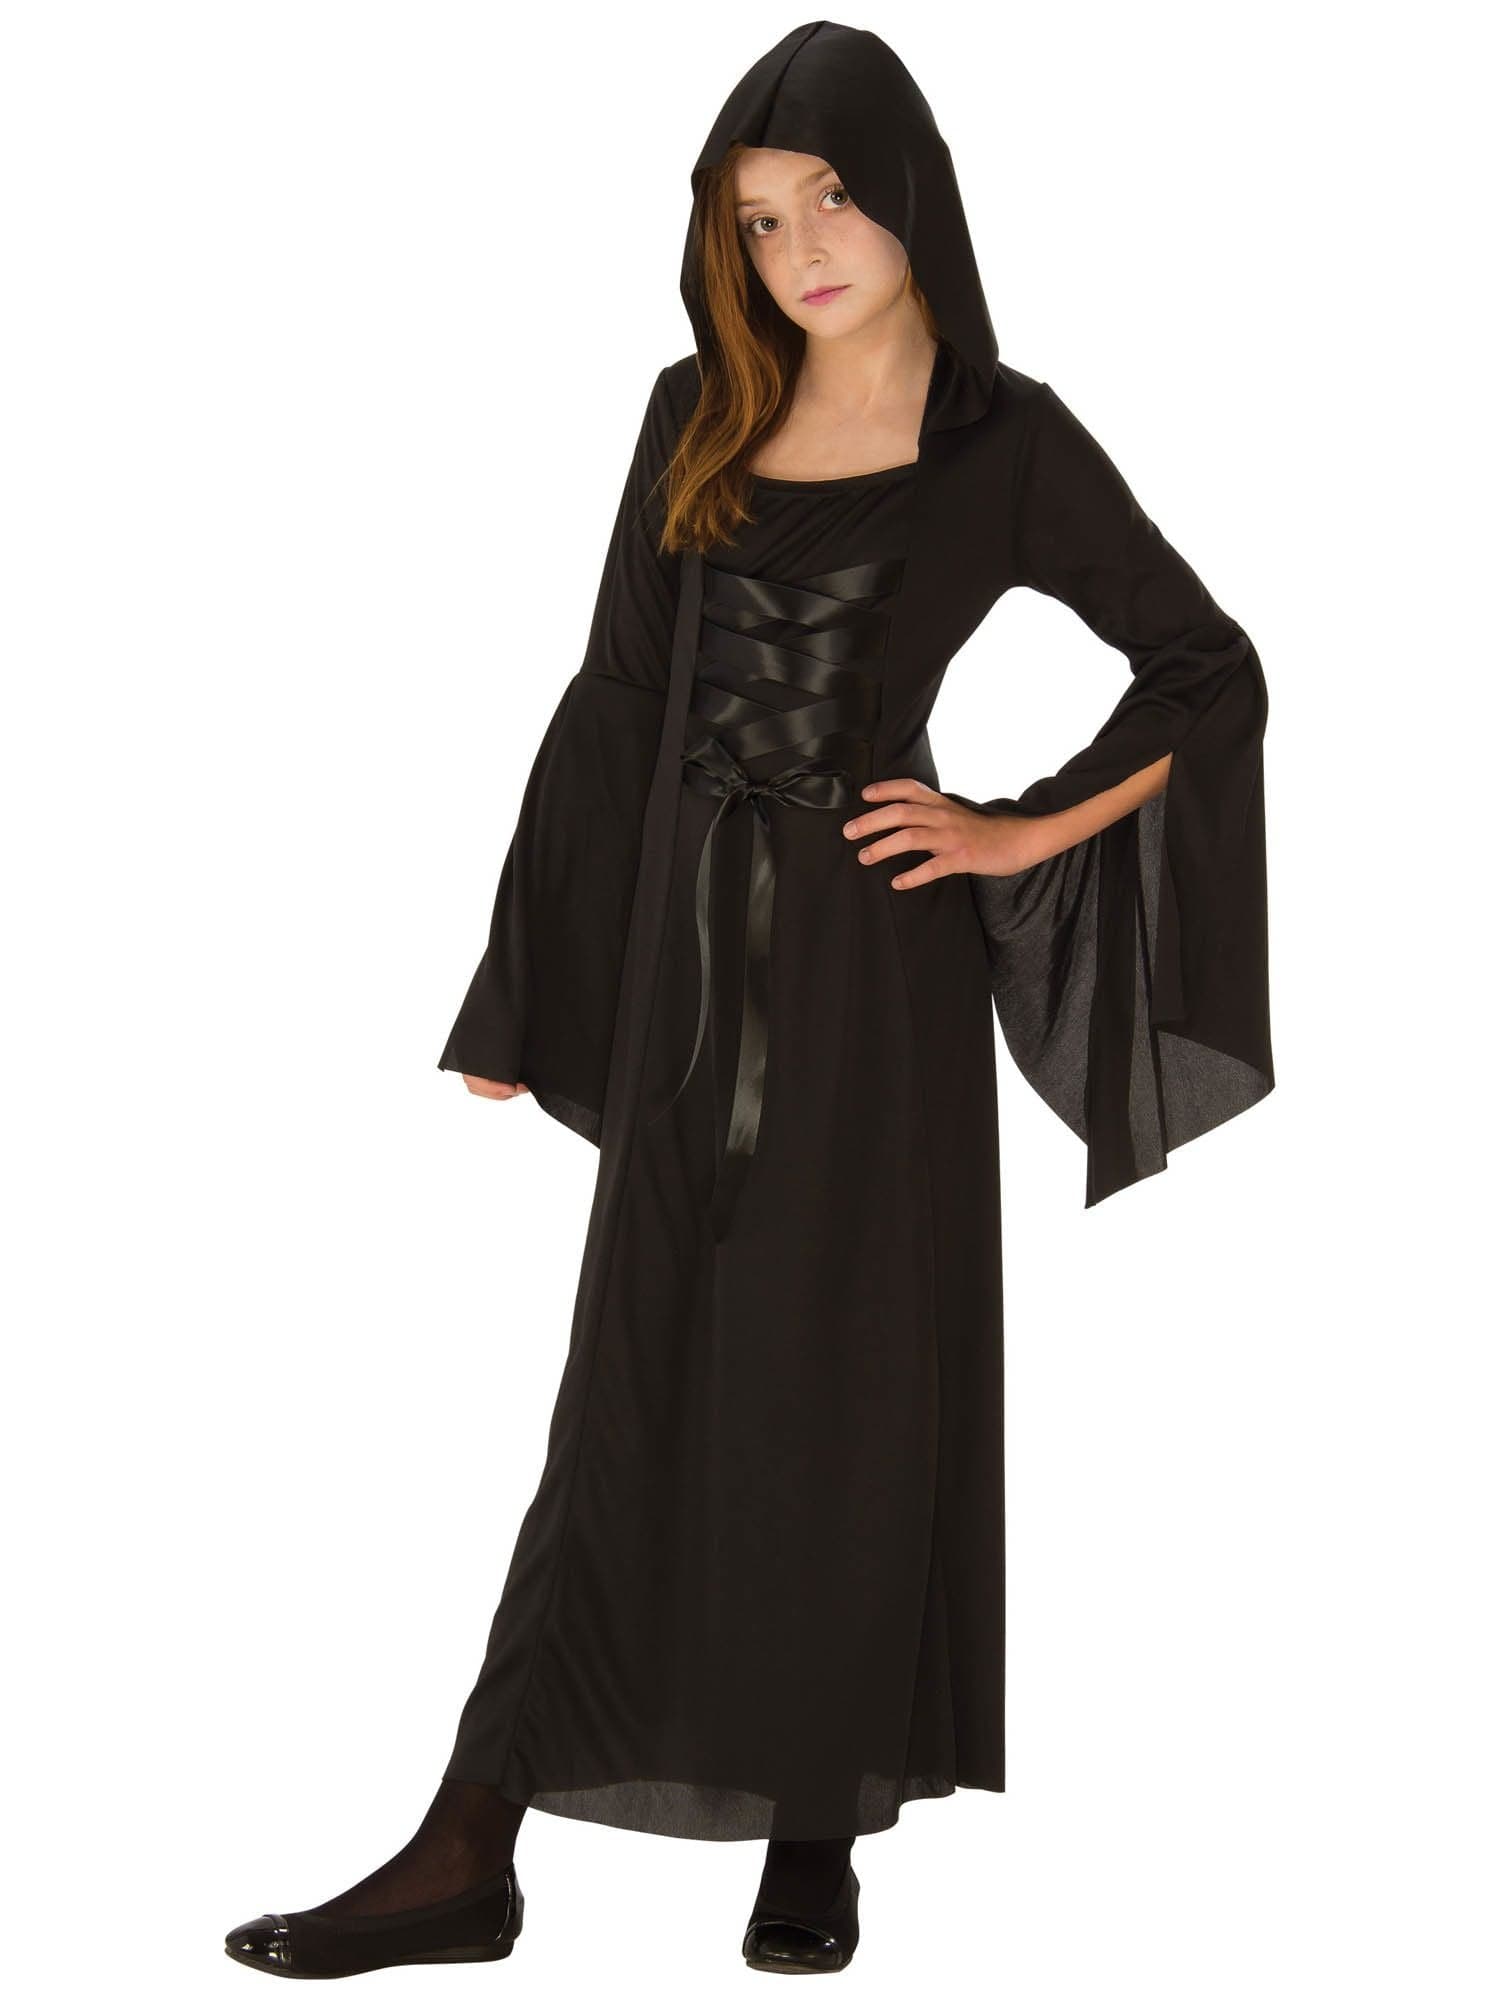 Kids Gothic Enchantress Costume - costumes.com